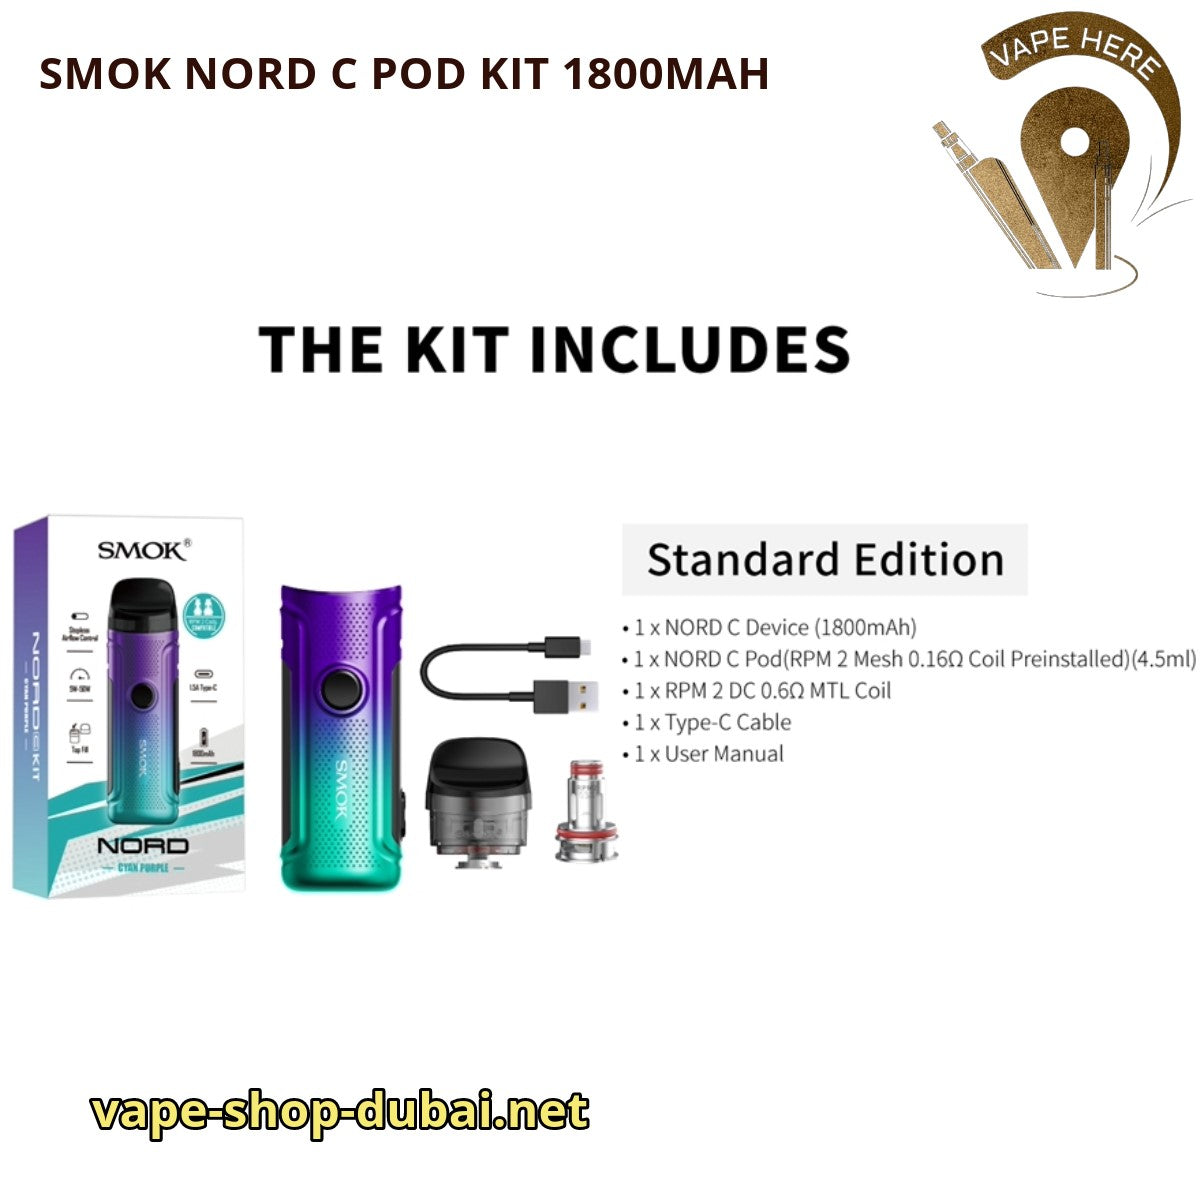 SMOK NORD C POD KIT 1800MAH UAE Dubai